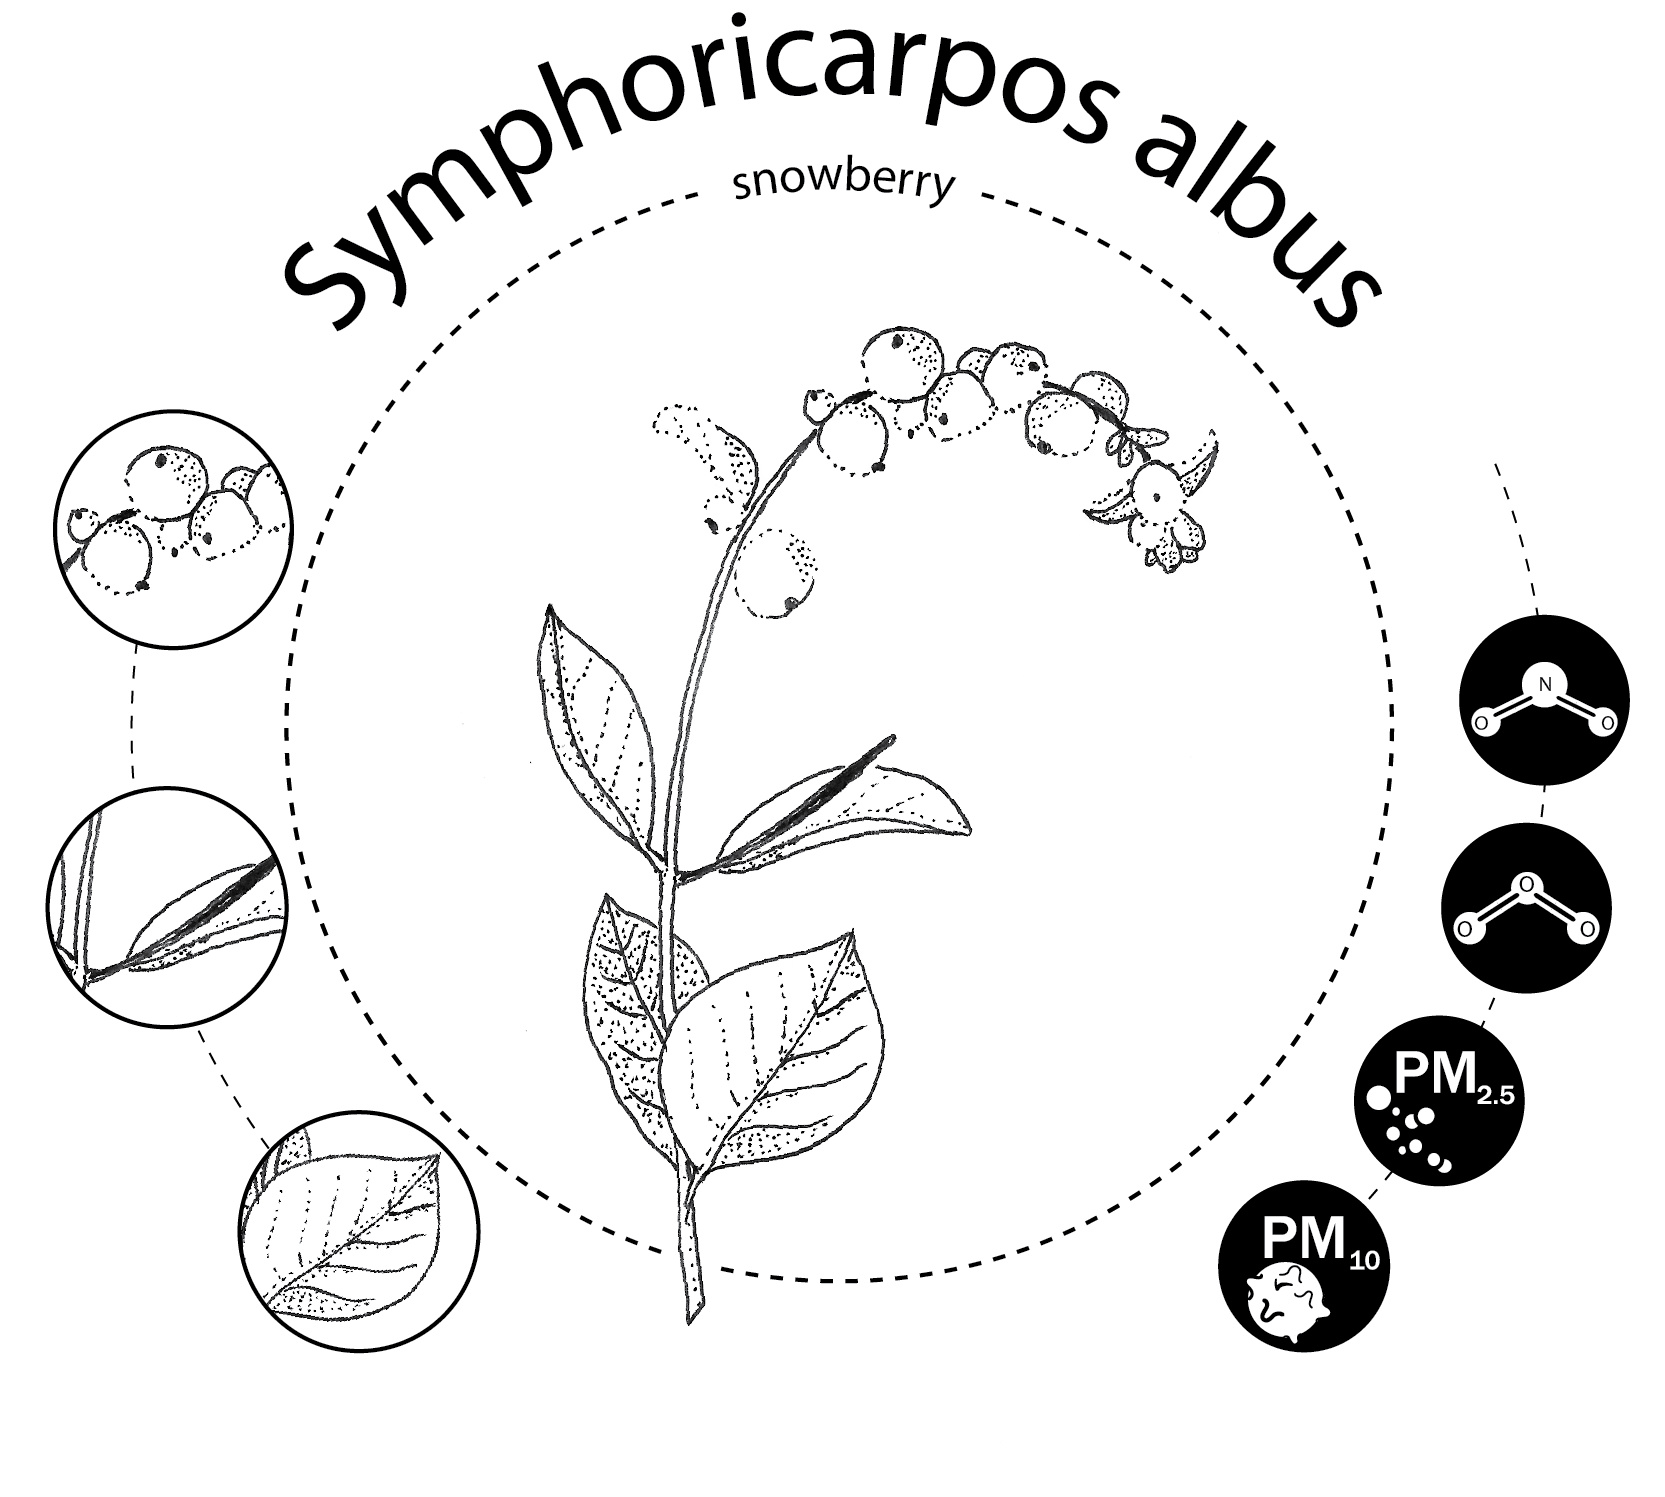 Symphoricarpos